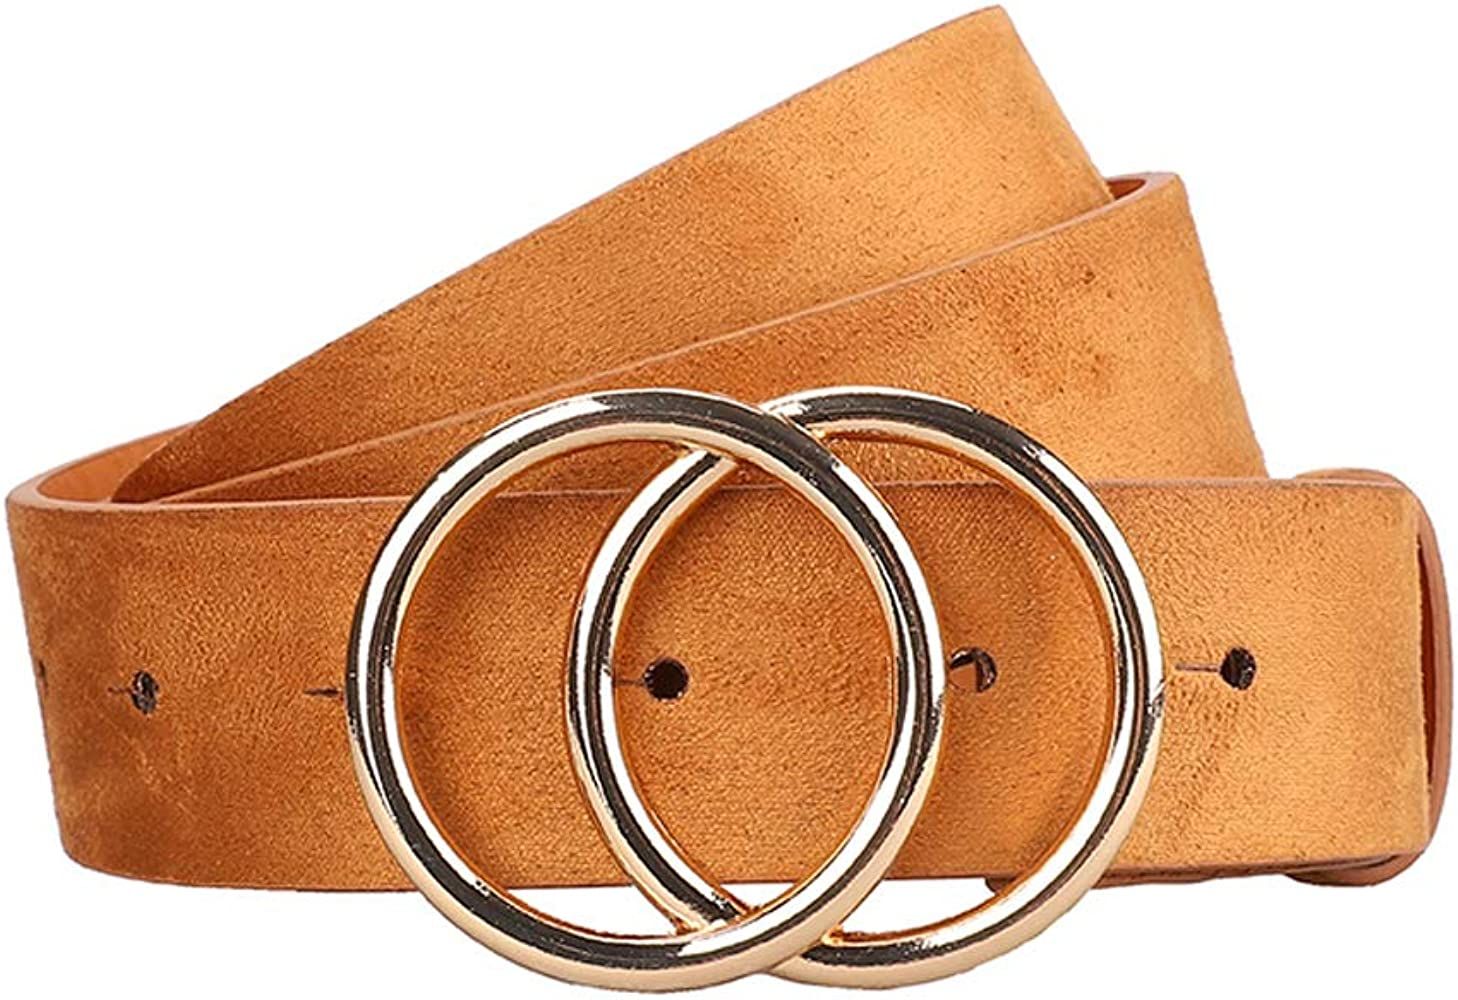 Earnda Women's Leather Belt Fashion Soft Faux Leather Waist Belts For Jeans Dress Camel Medium at... | Amazon (US)